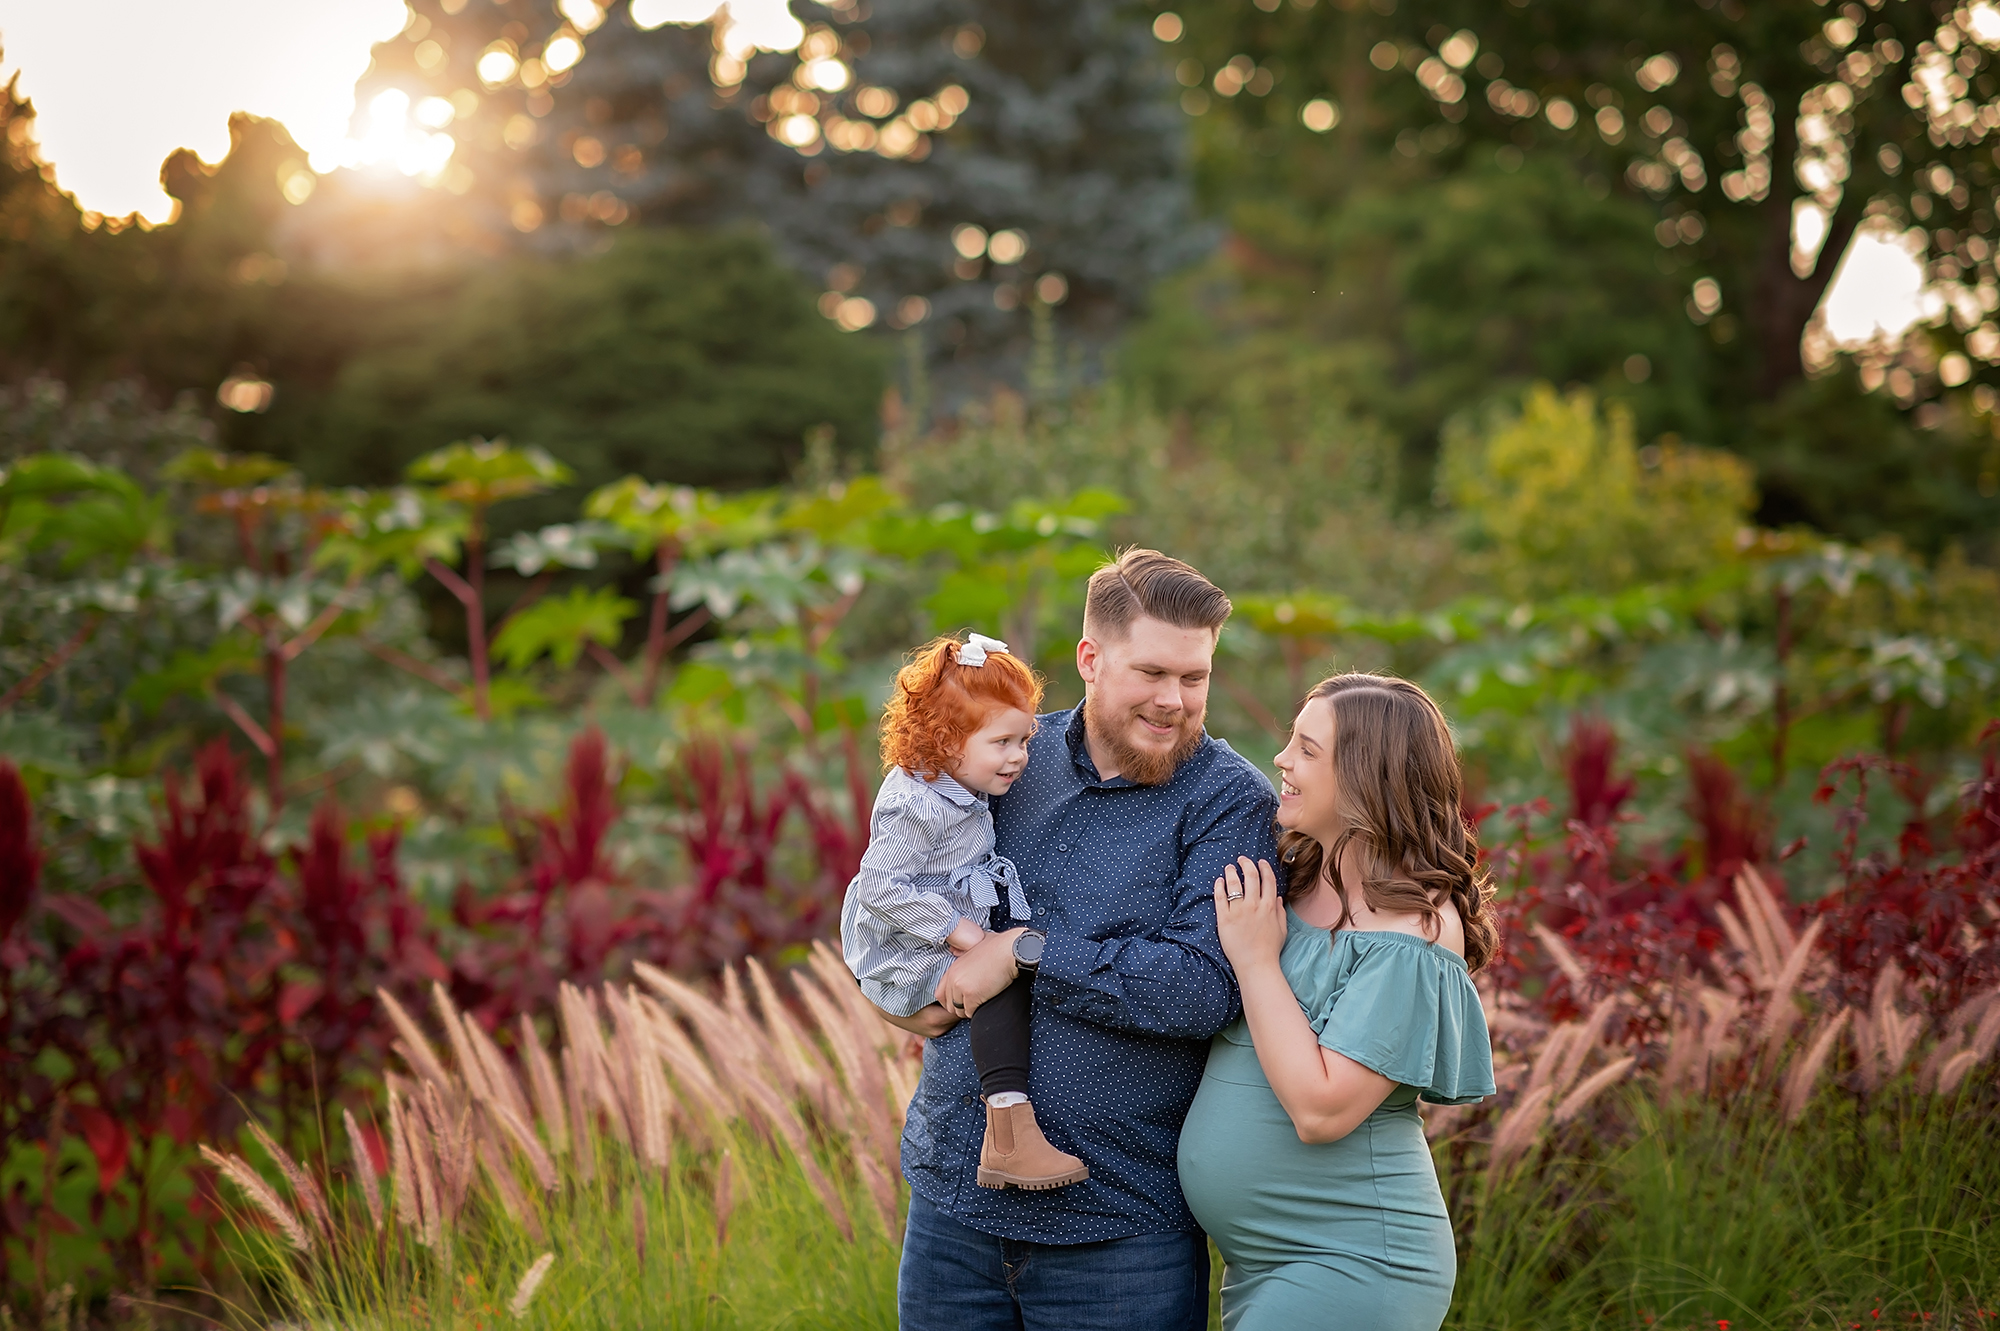 Ottawa Family Photographer | Location Feature of the Experimental Farm Ornamental Gardens